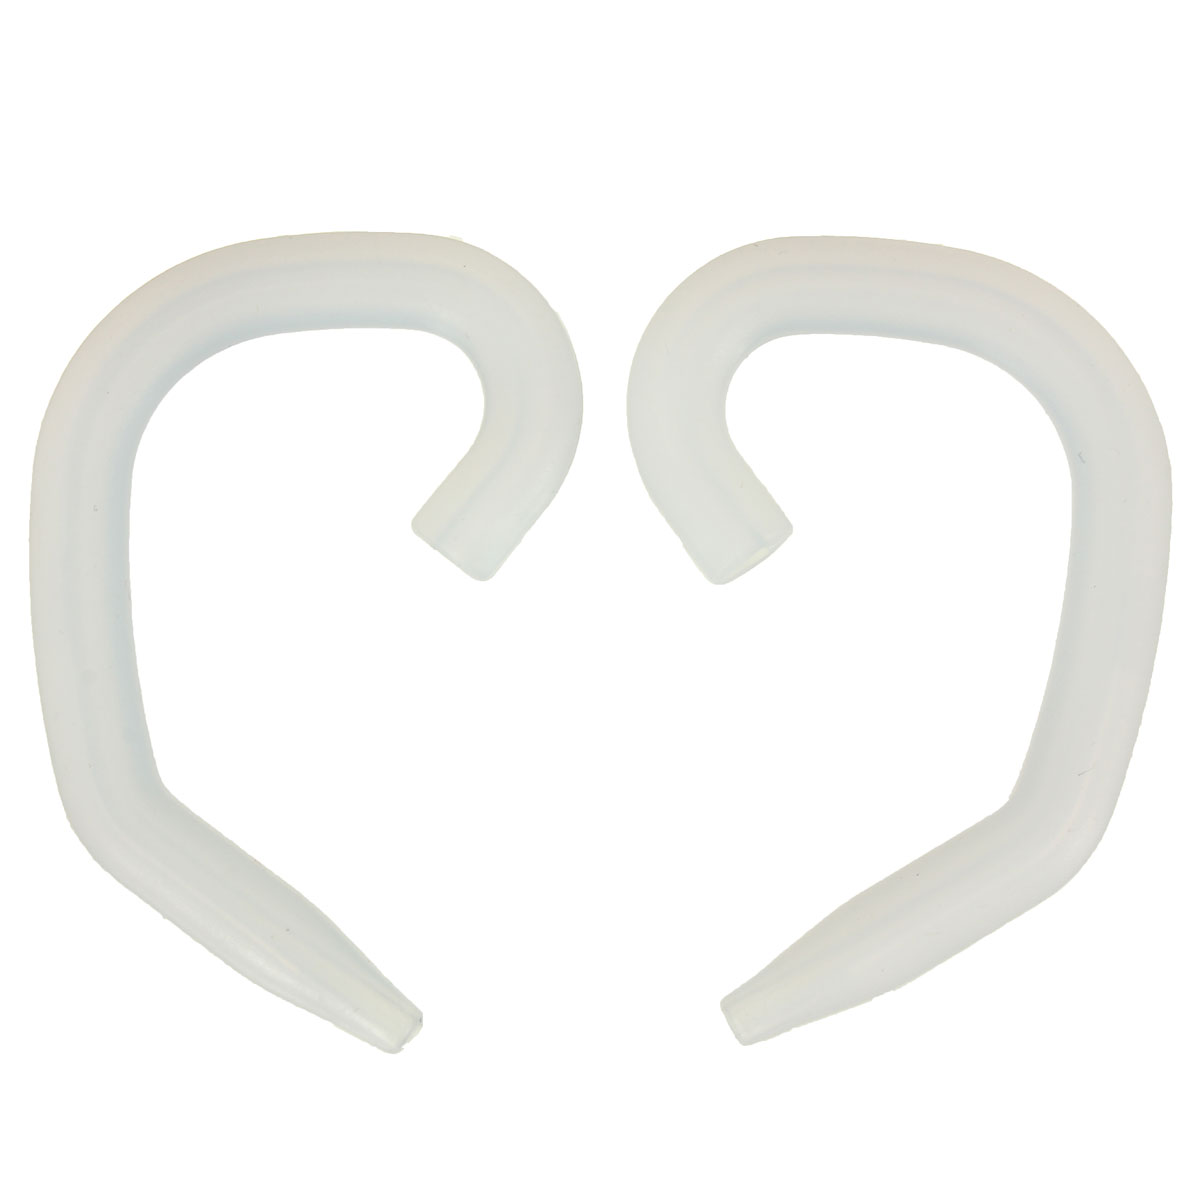 2pcs-Earhooks-for-Headphones-Earring-Hooks-for-Wired-Earbuds-Headset-1974802-3